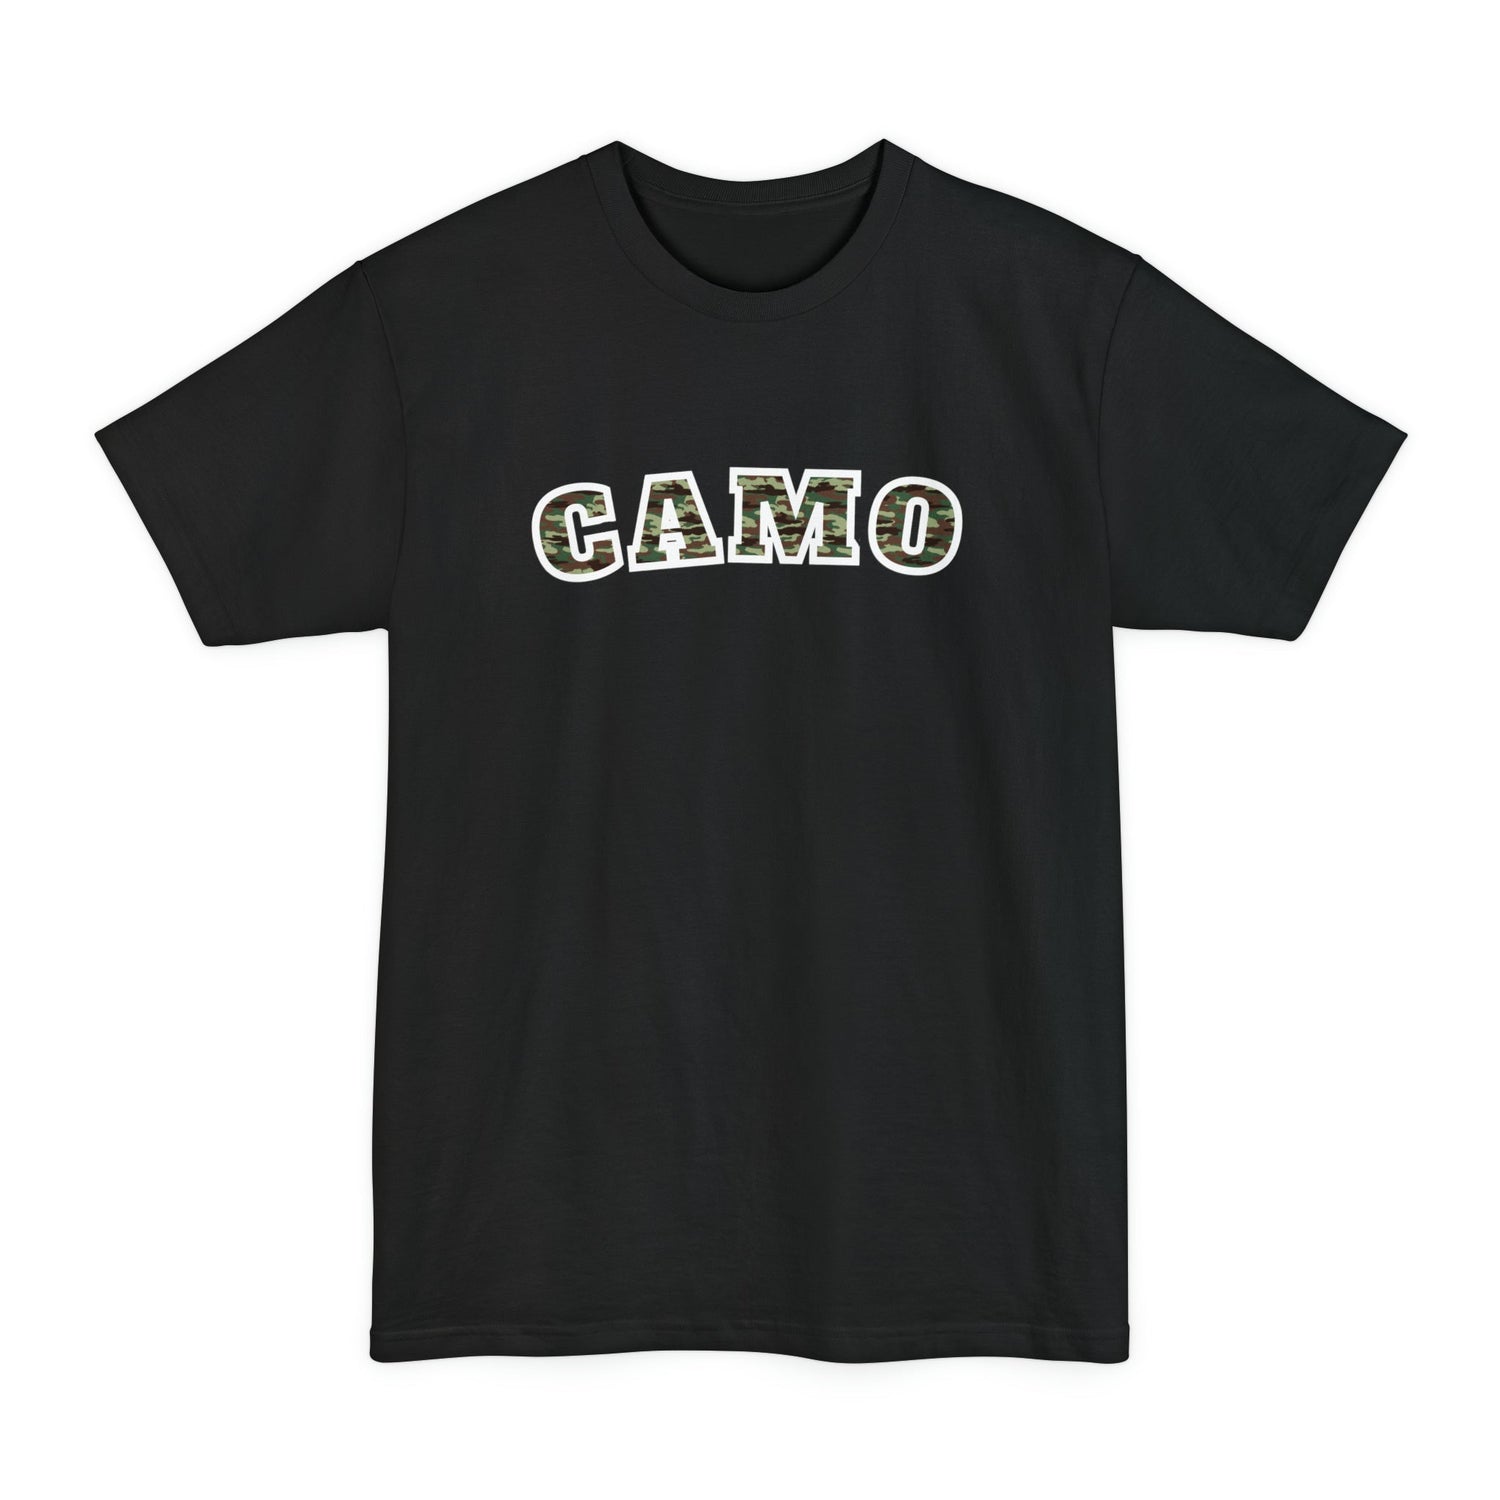 Big and Tall Western Hunting T-Shirt - Camo Shirt